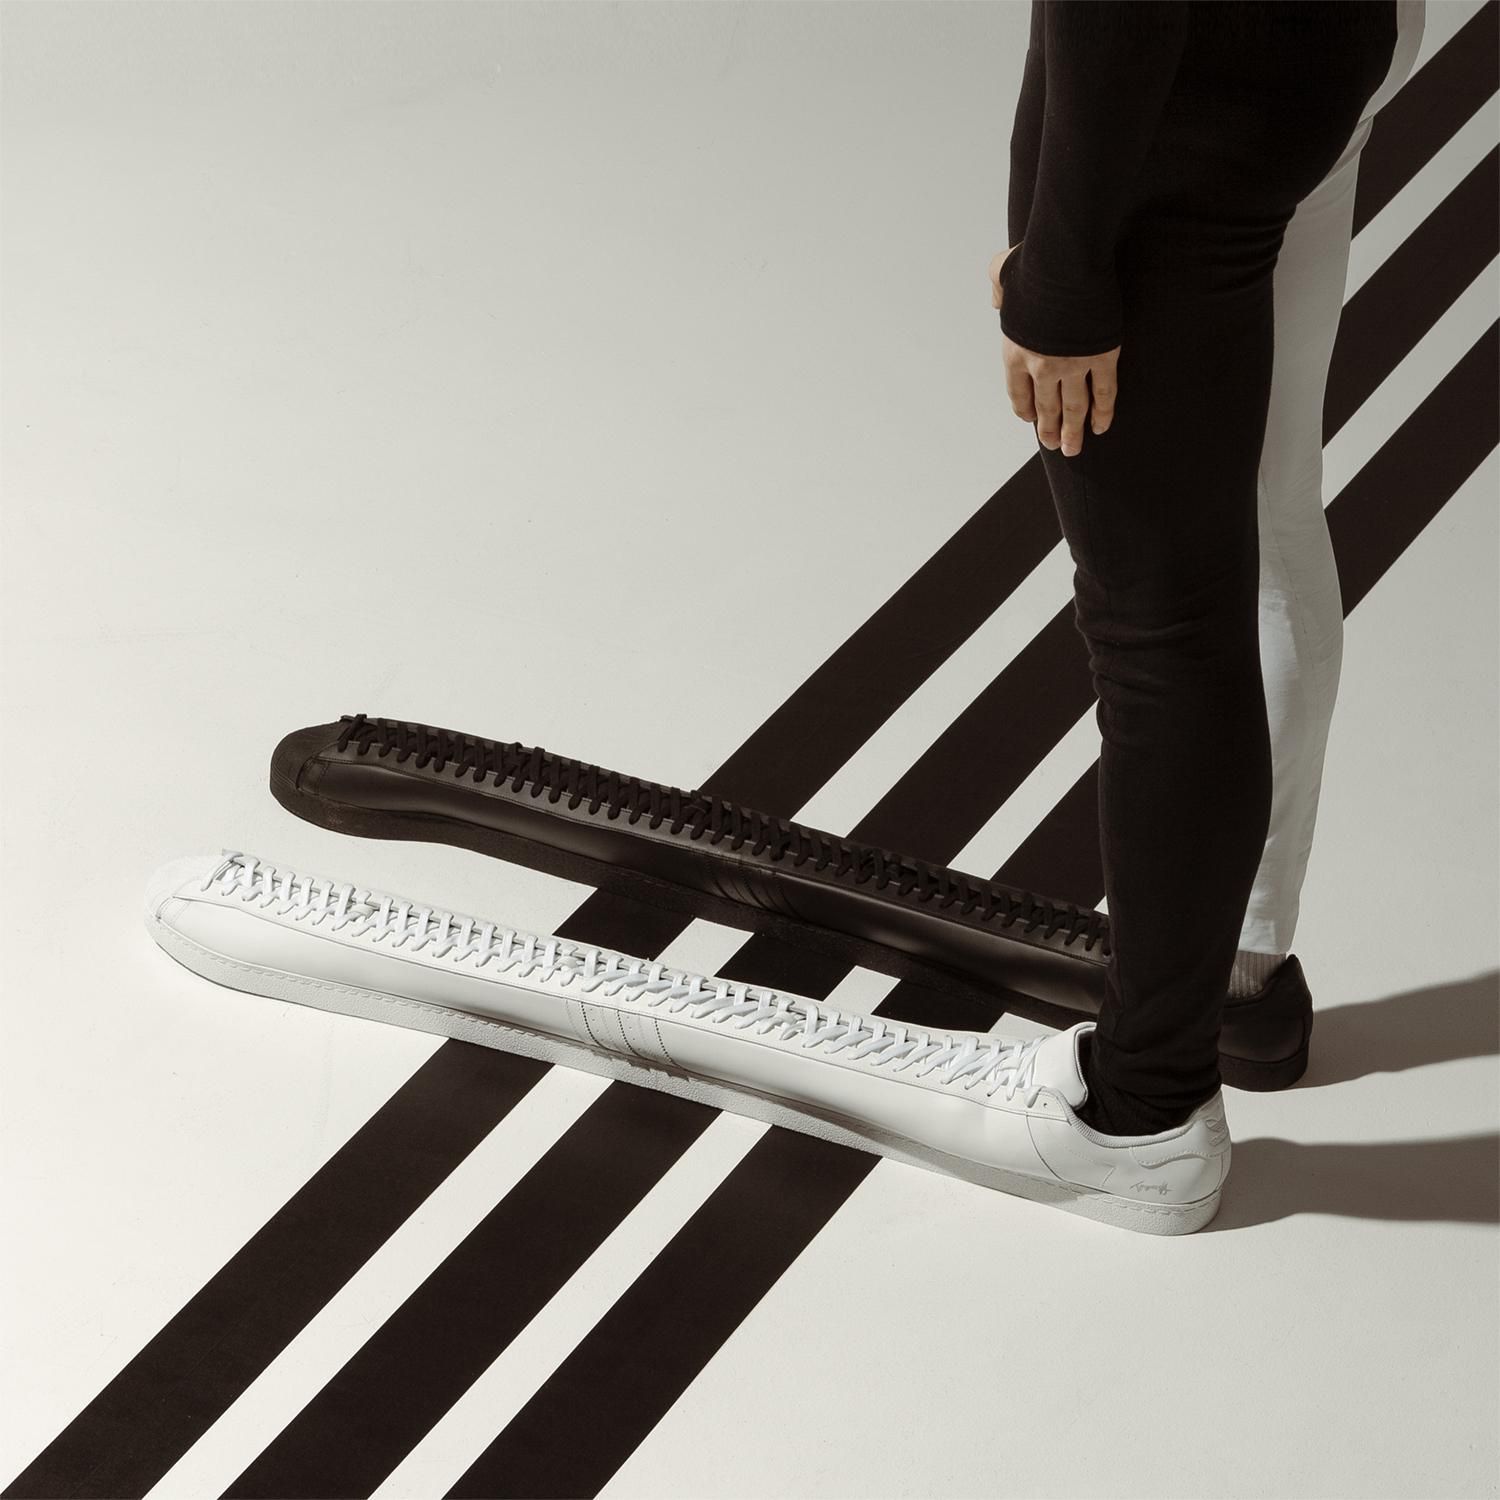 adidas rapper shoes